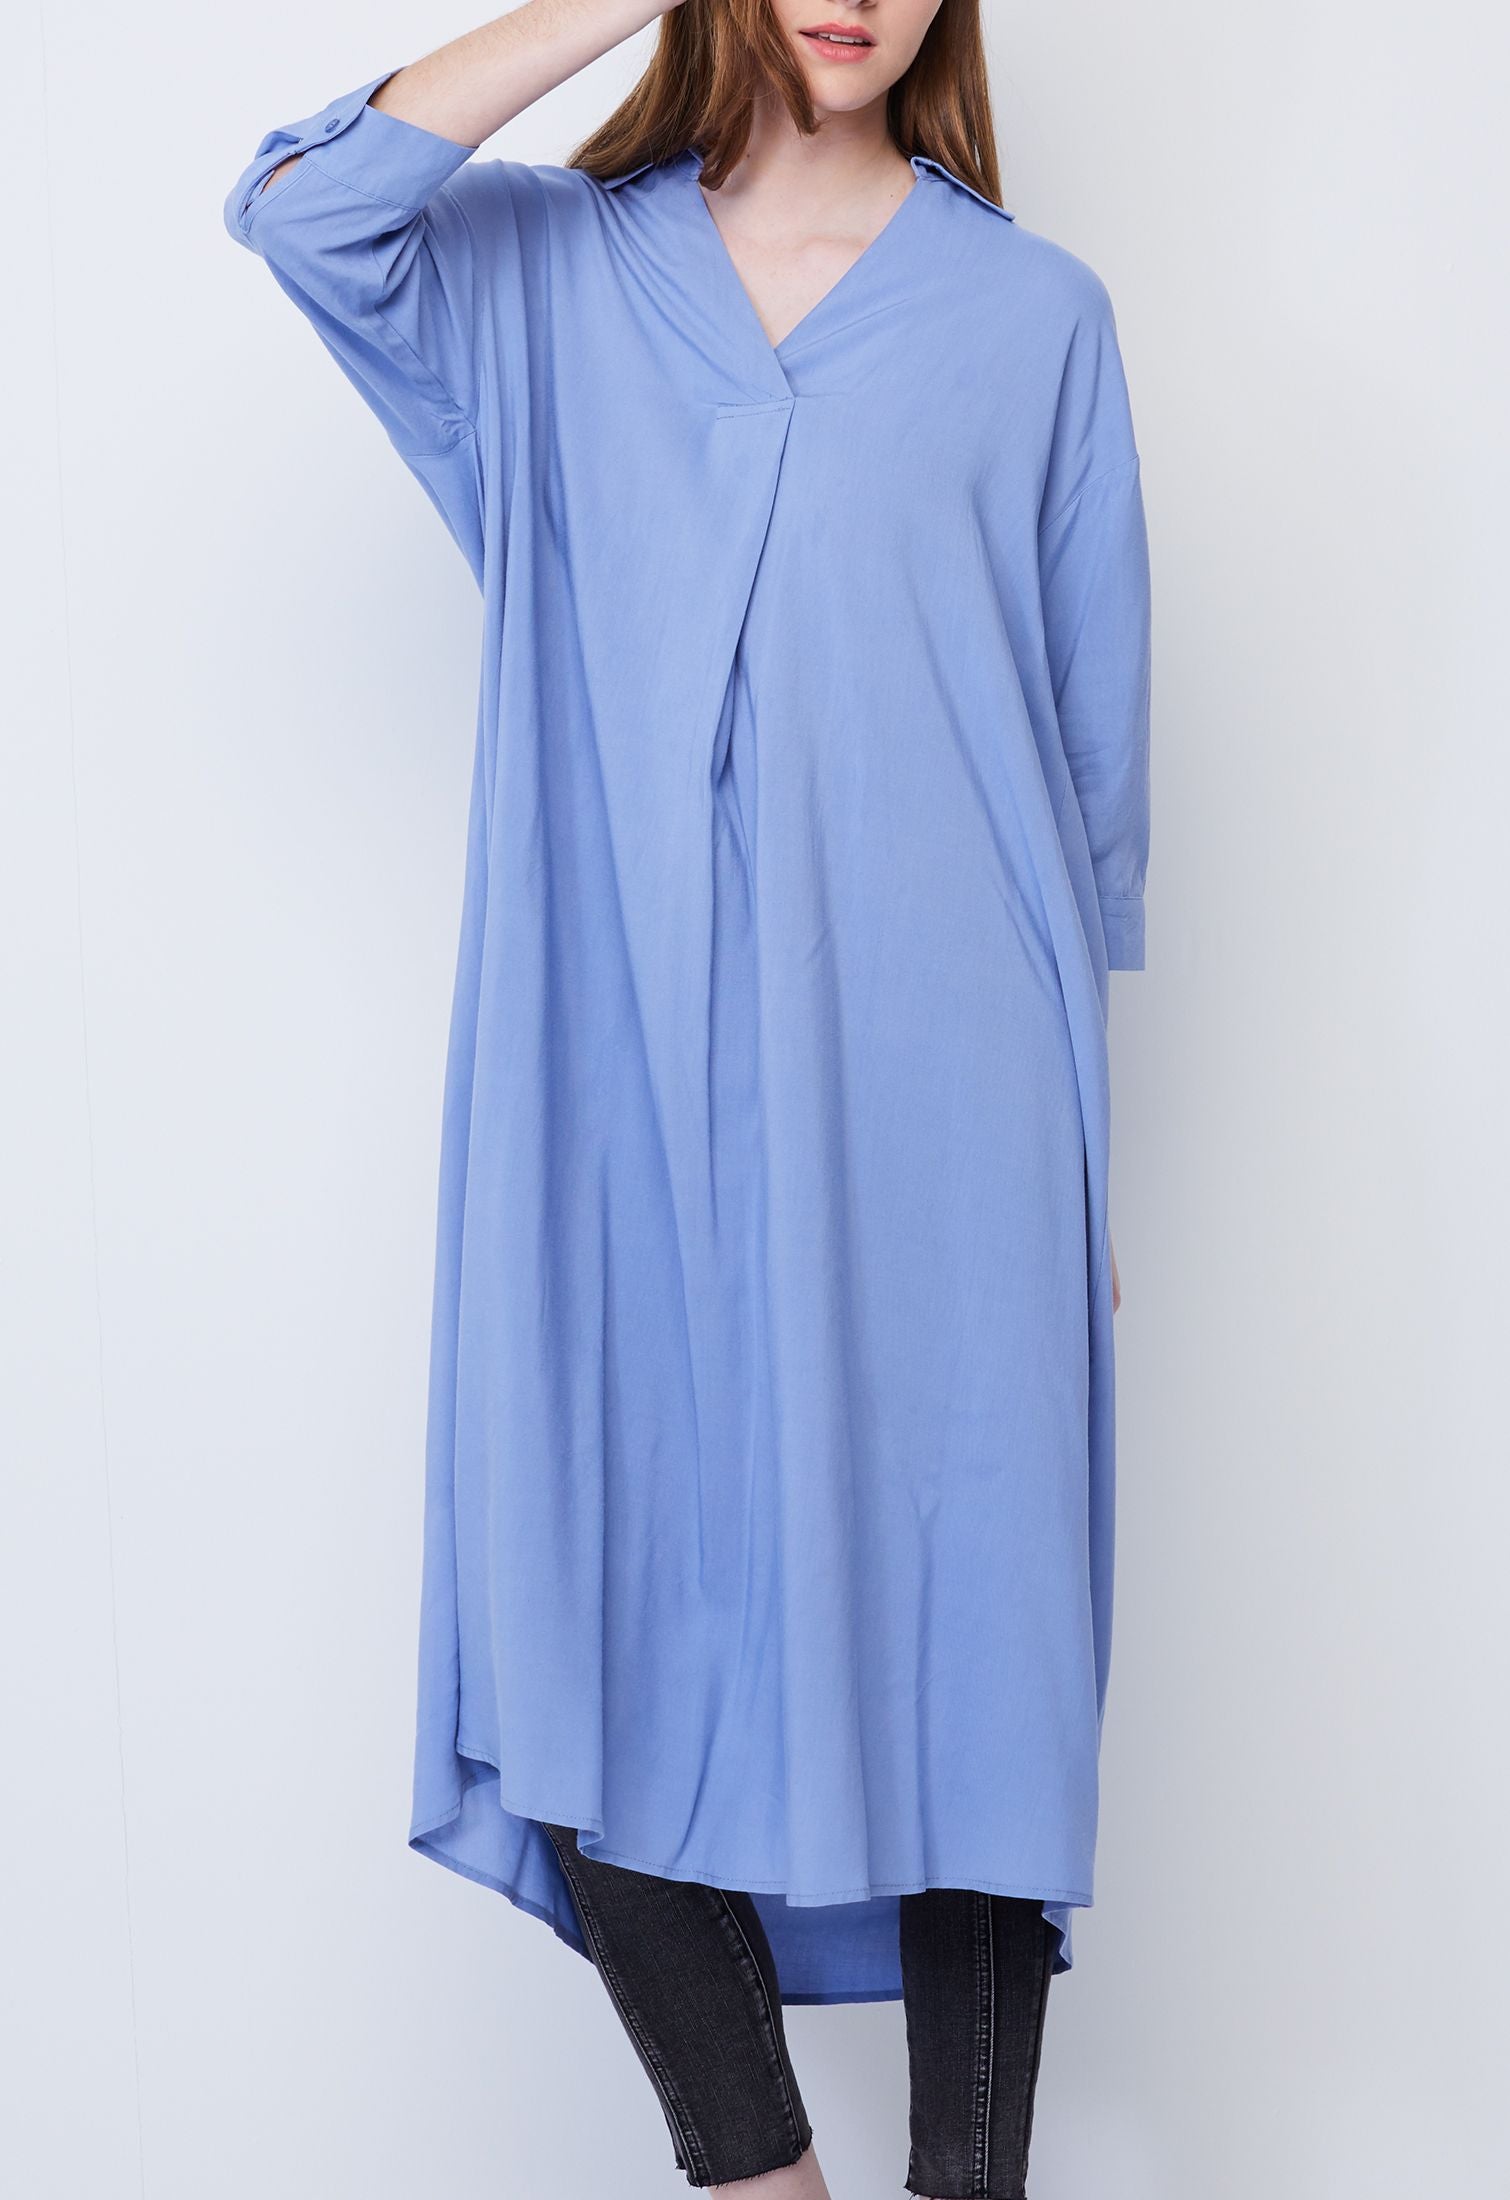 Slip-on Dress with Folded Cuff Sleeve